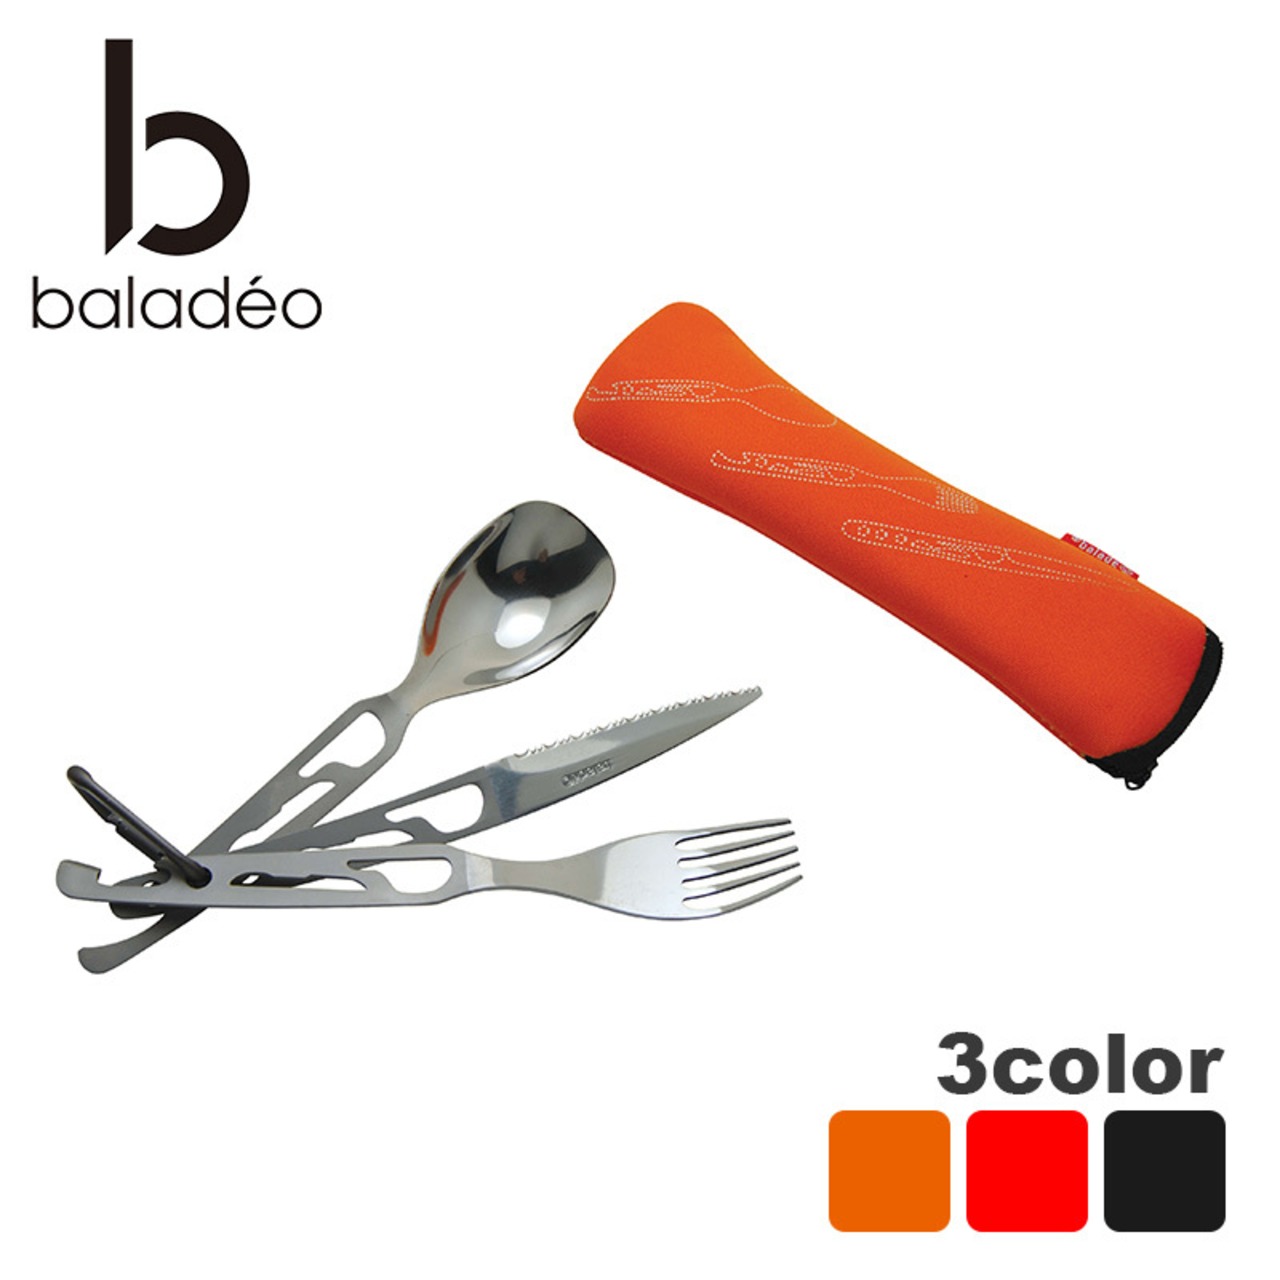 baladeo(バラデオ) 5 functions cutlery set Basecamp bd-011